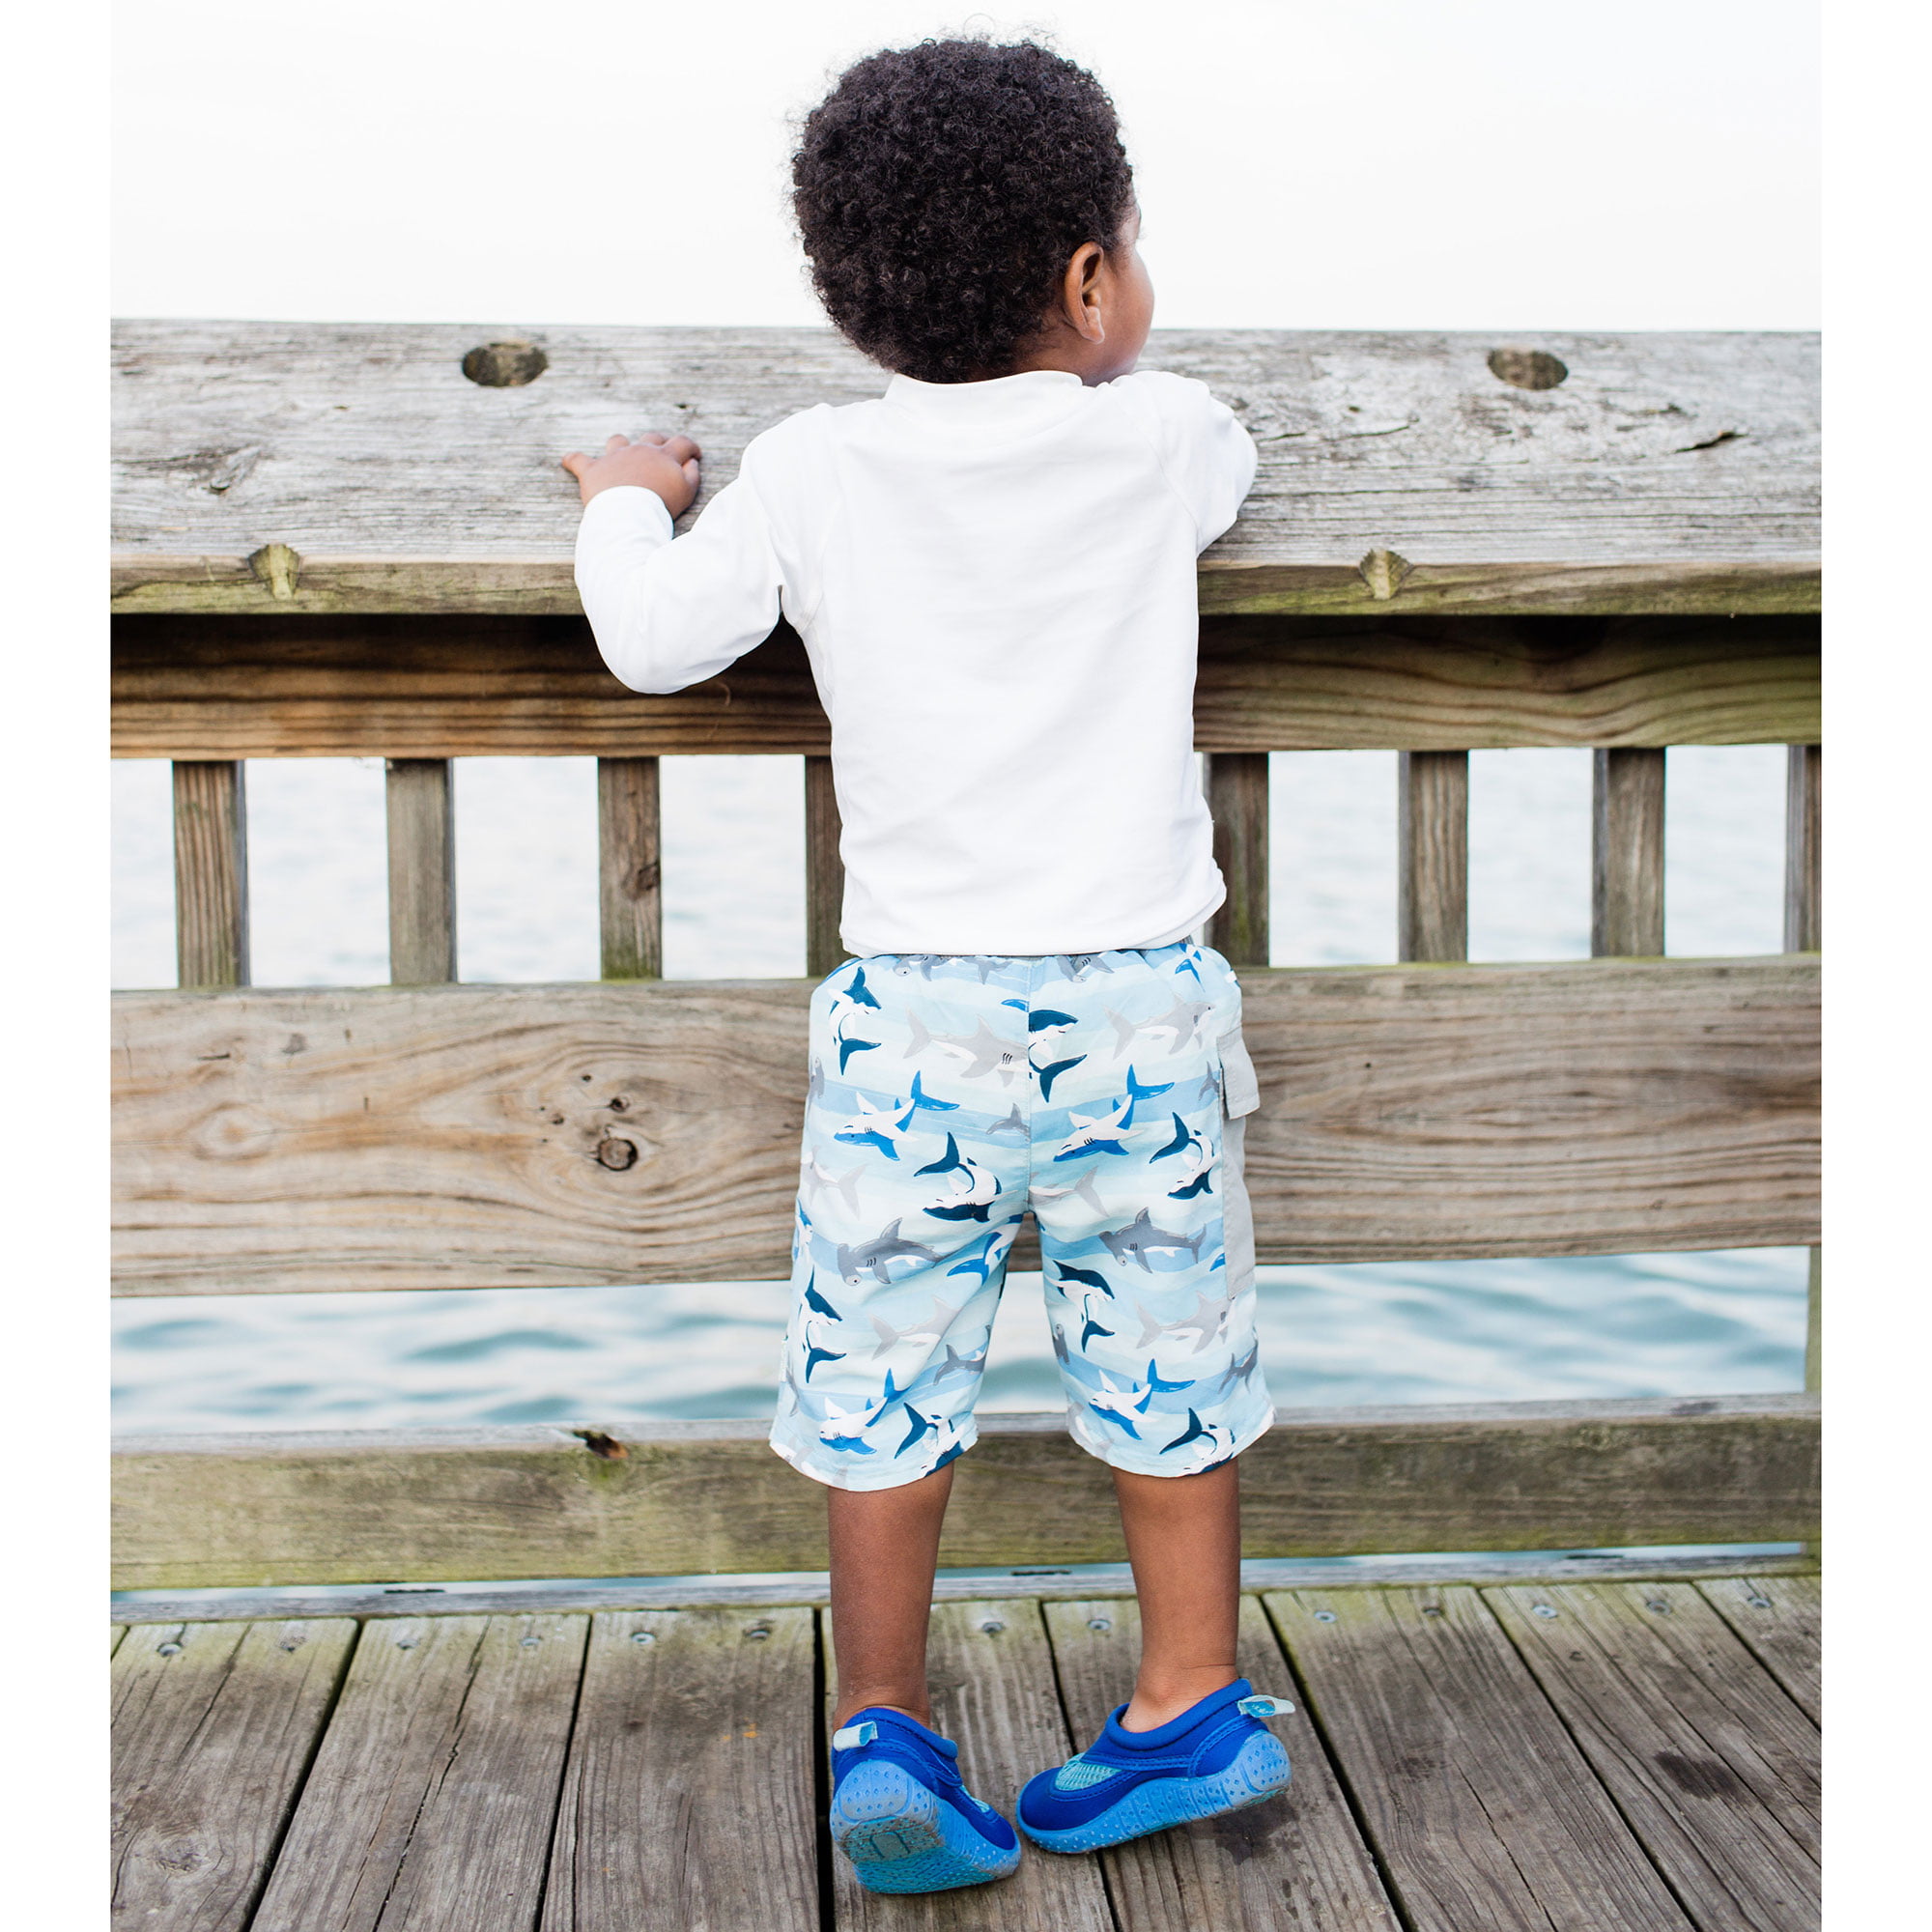 Galop Boys Kids 672814 Aqua Beach Pool Wet Suit Mesh Socks Surf Water Shoes Size 12.5-6 